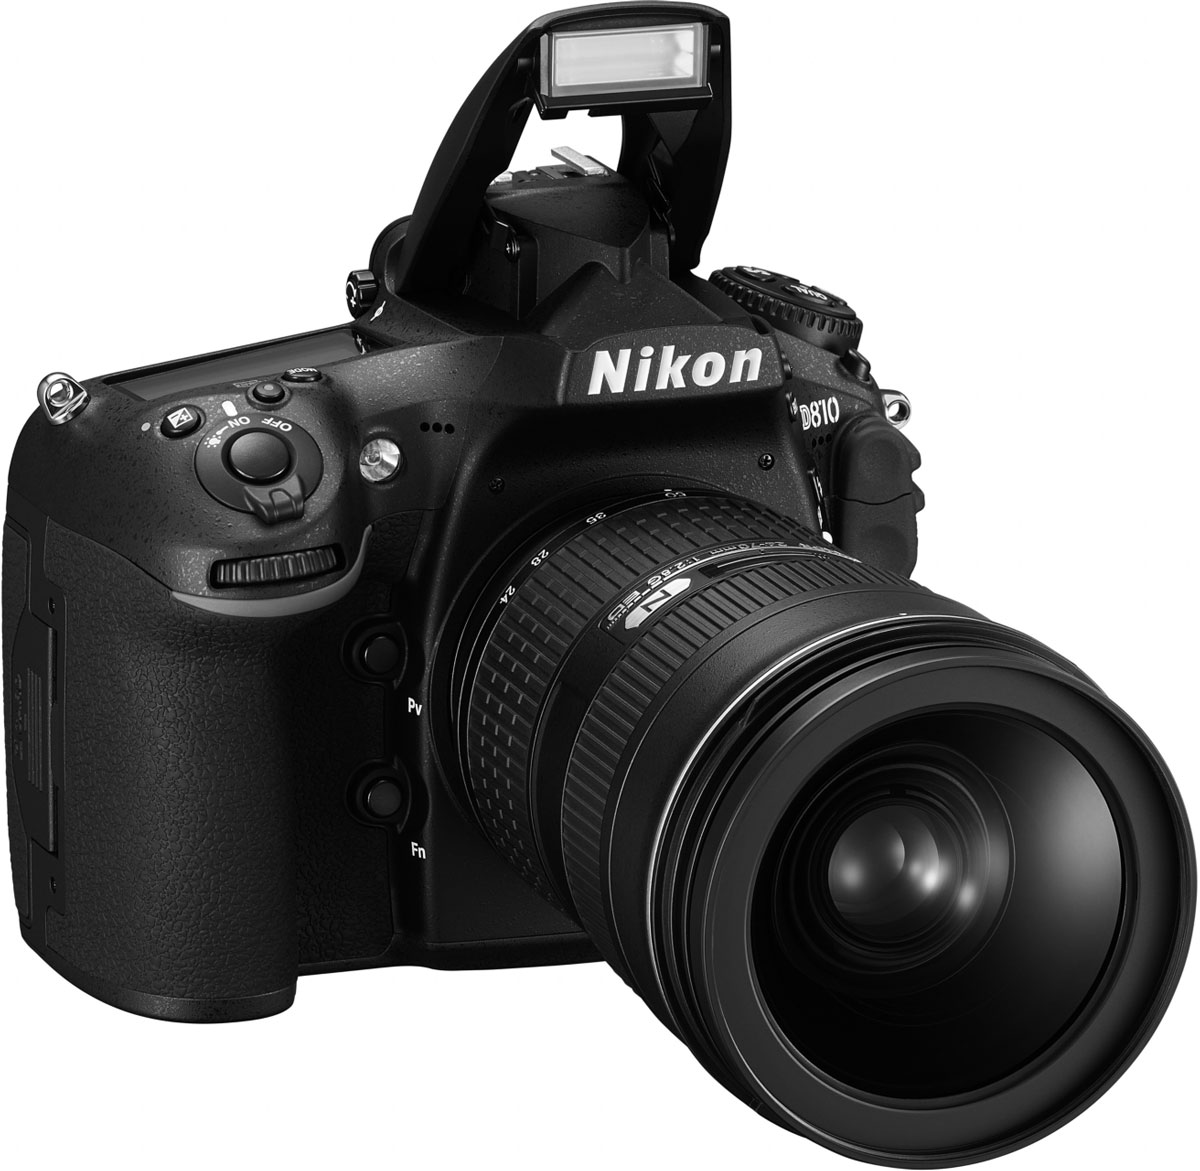 D810: Nikon's Flagship Camera